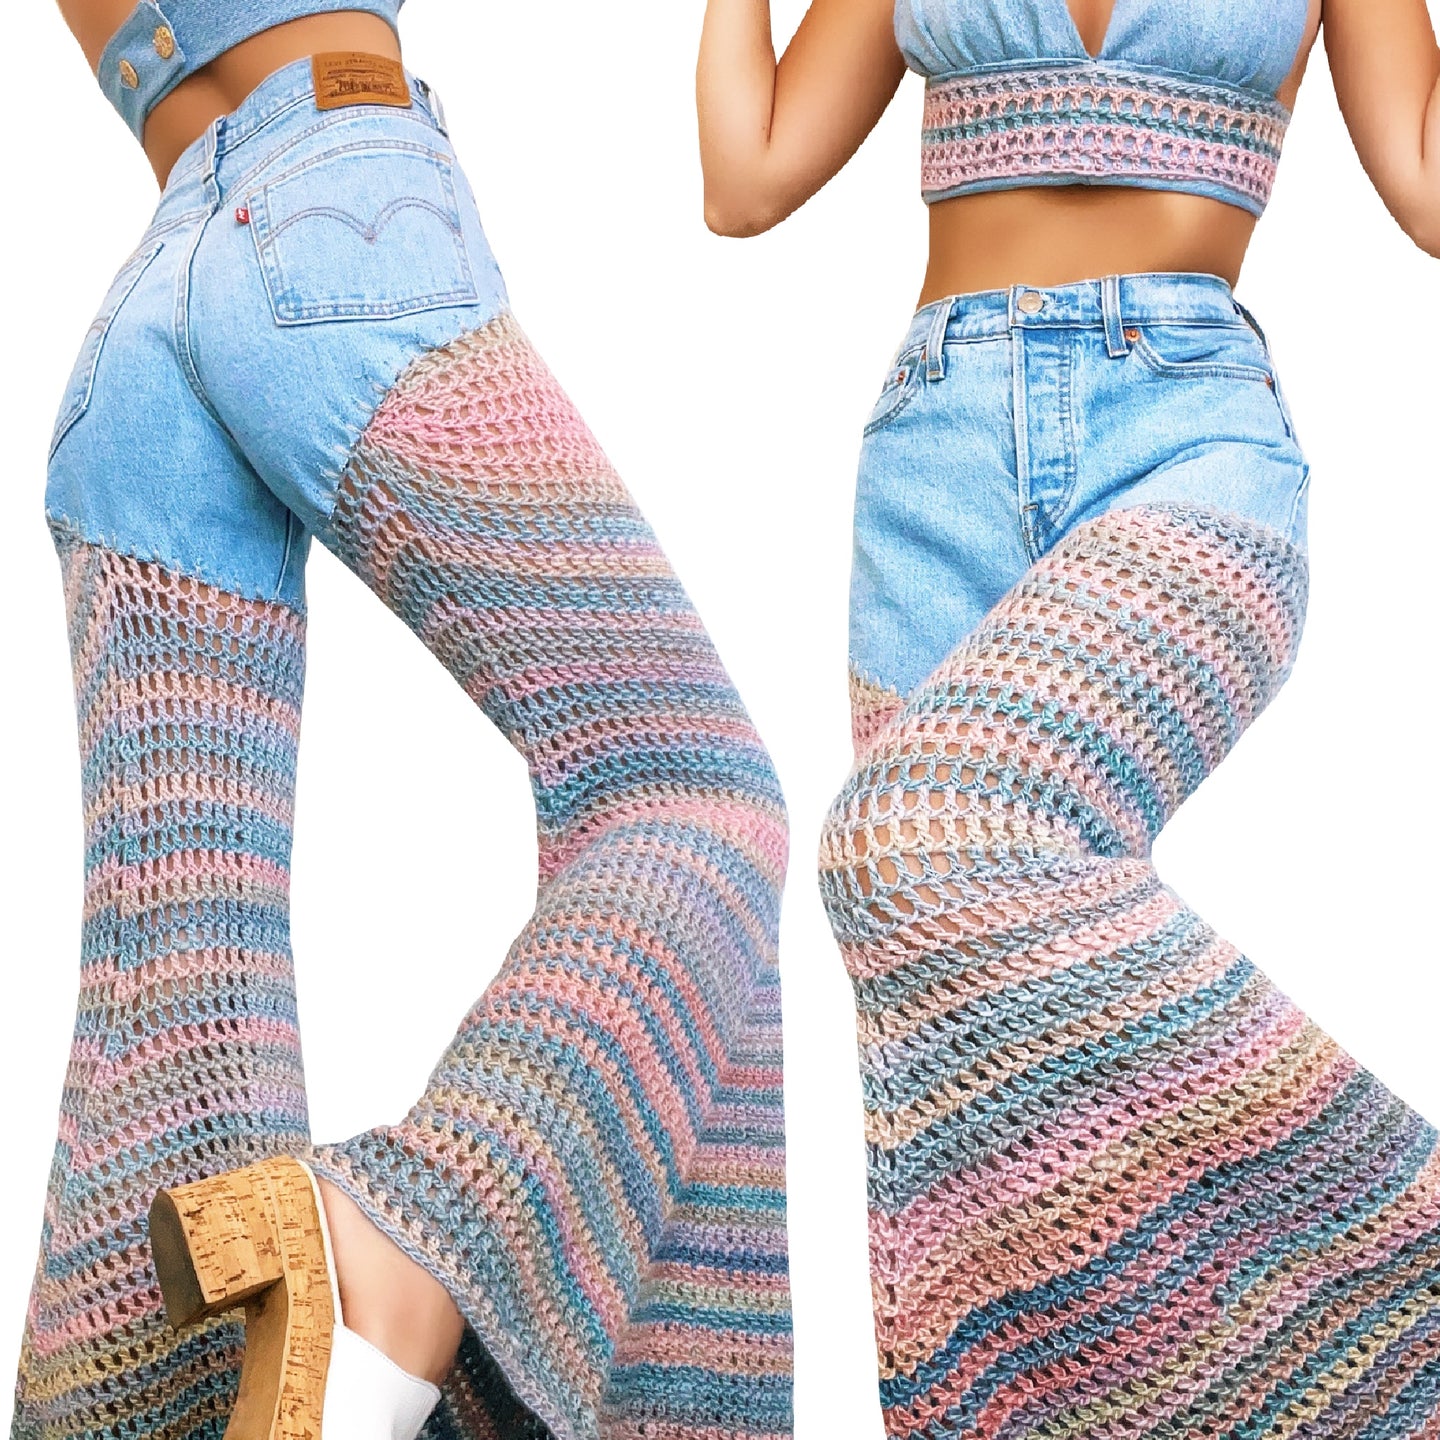 Reworked Cotton Candy Levi’s by Carolannie Crochet